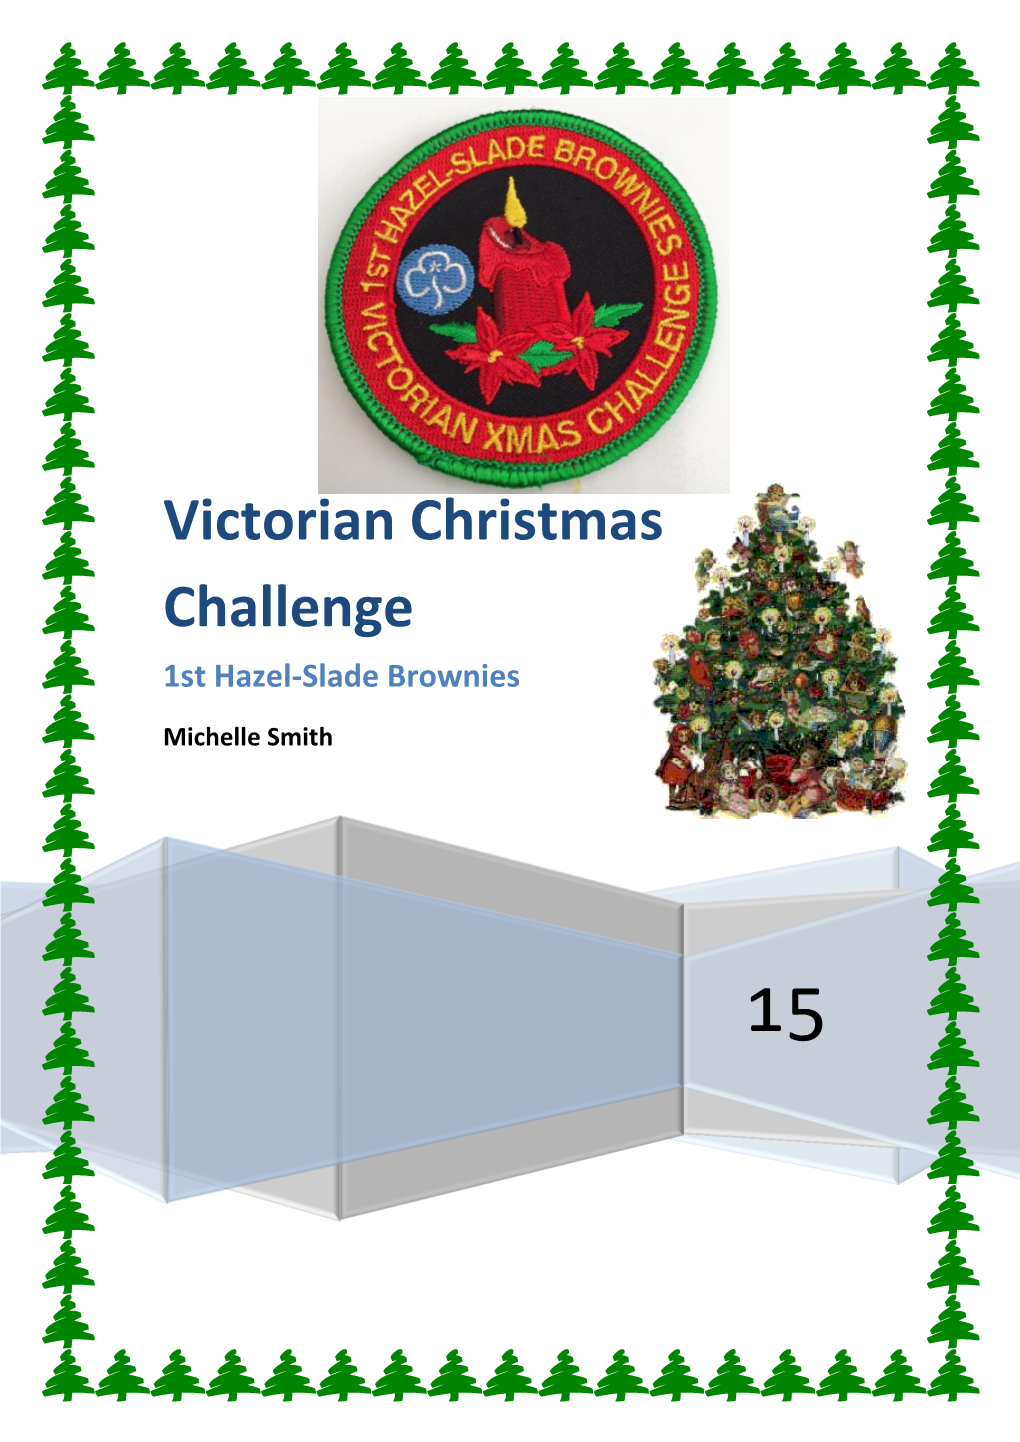 Victorian Christmas Challenge 1St Hazel-Slade Brownies